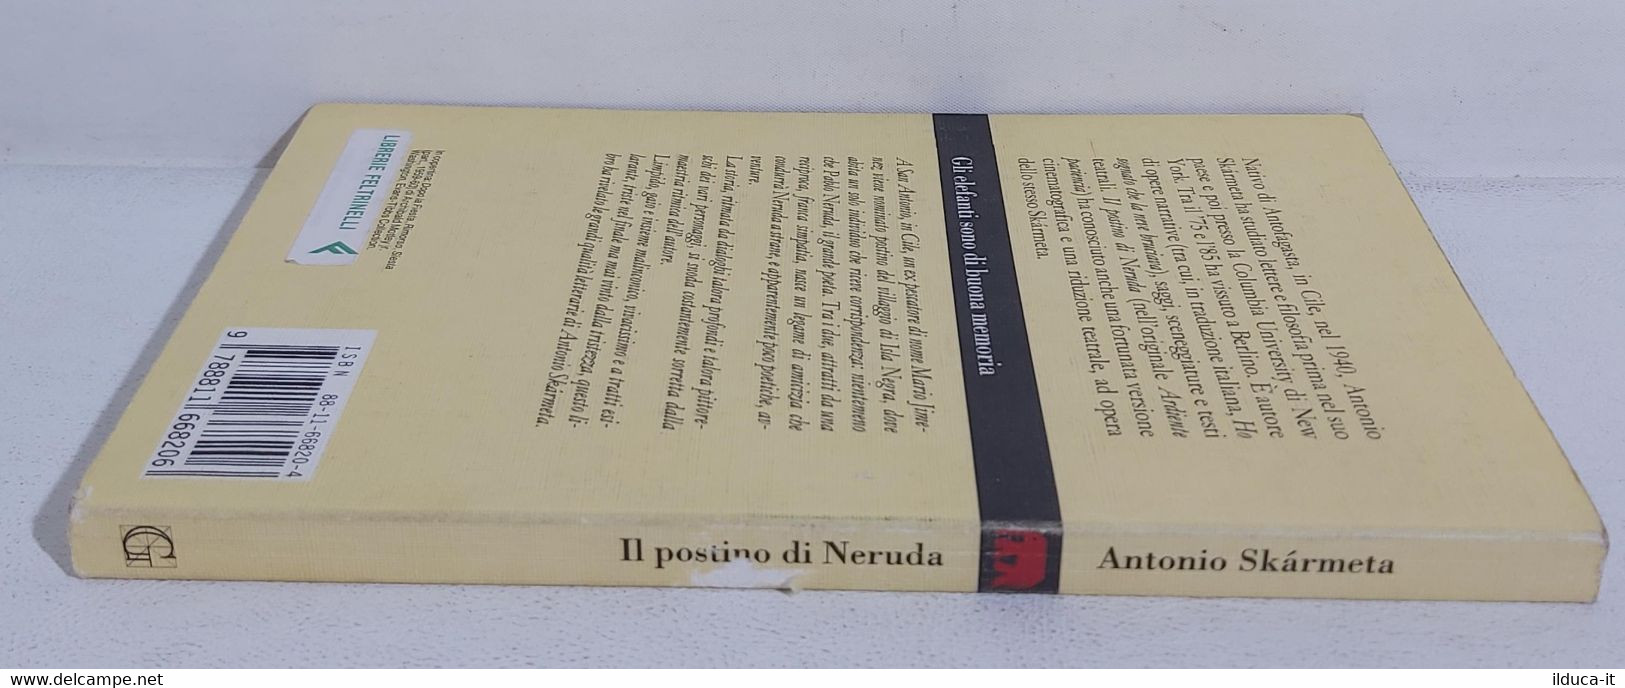 I106604 Antonio Skarmeta - Il Postino Di Neruda - Garzanti 1994 - Tales & Short Stories